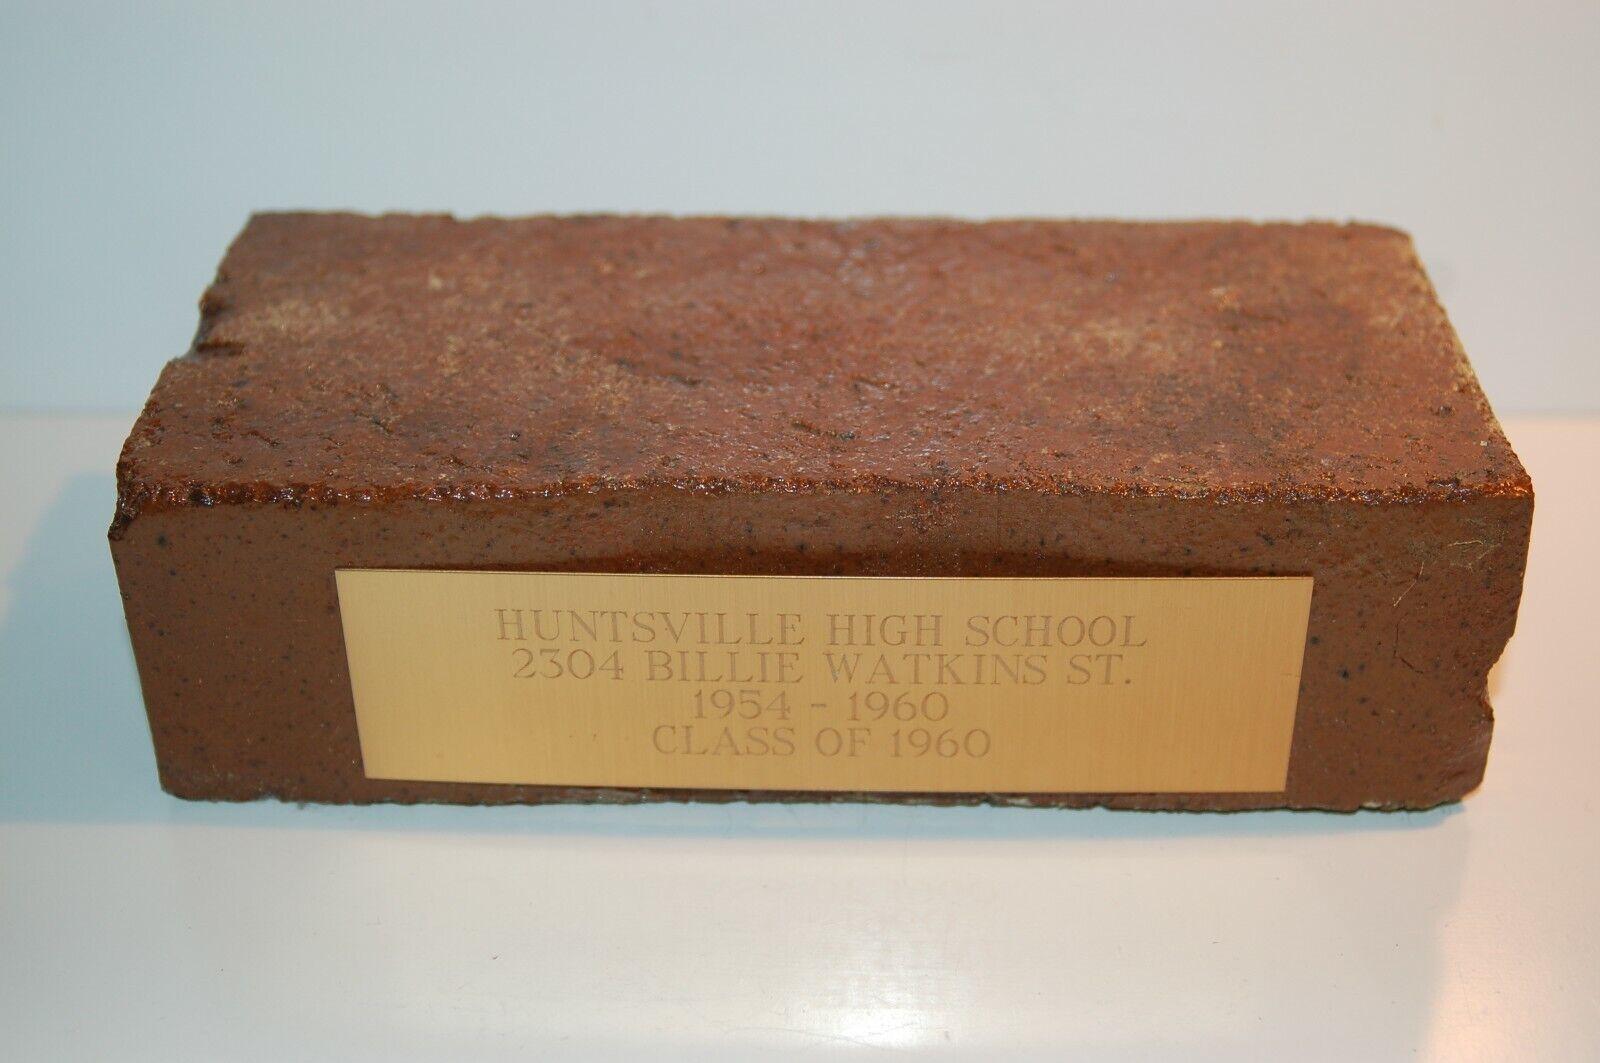 Vintage Huntsville, AL High School Brick 2304 Billie Watkins St. 1954 - 1960 